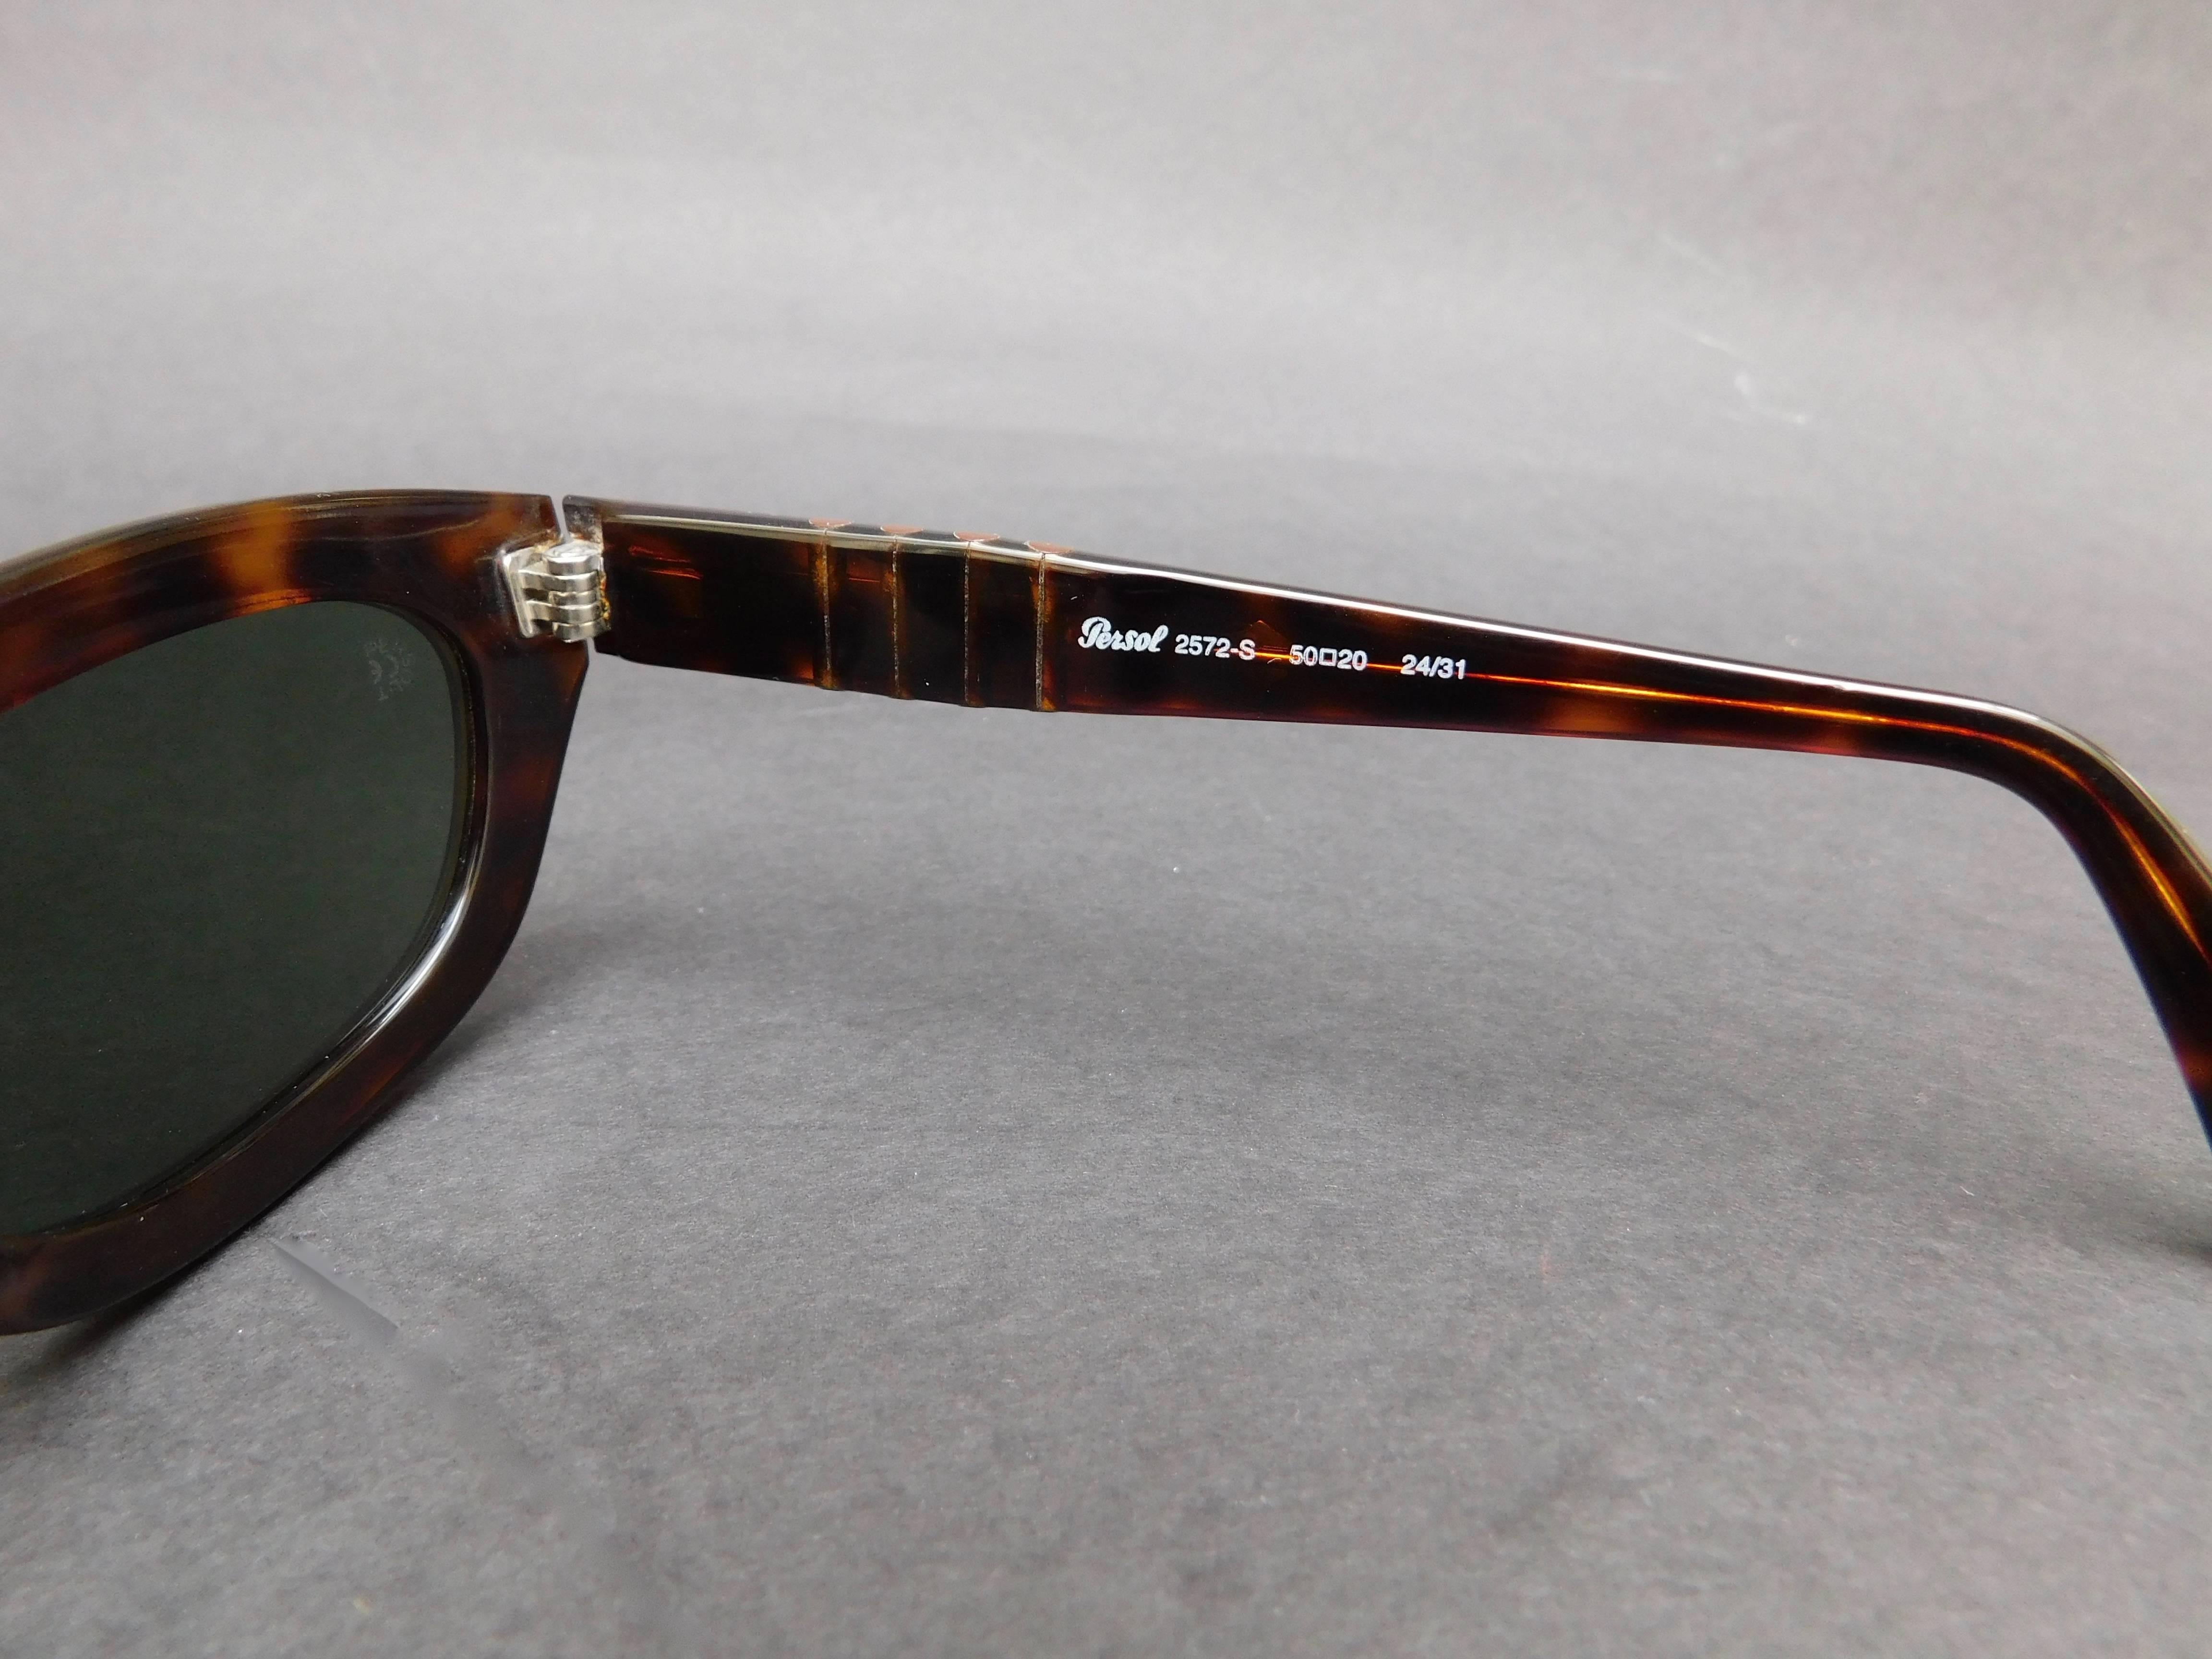 Women's or Men's Persol Model 2572-s Brown Tortoise Sunglasses